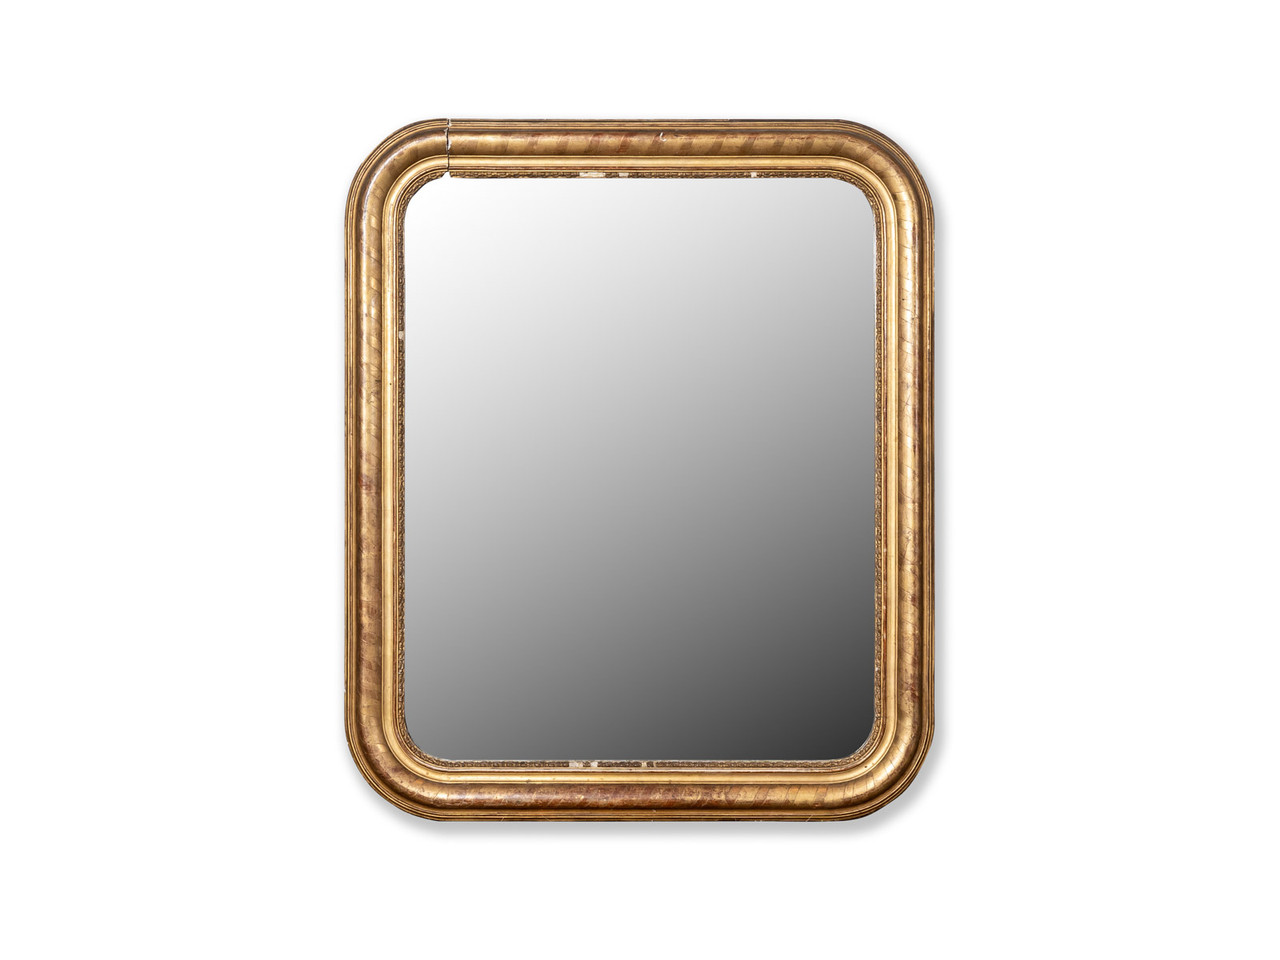 A Plus International Dresser Mirrors Louis Philippe II B9146